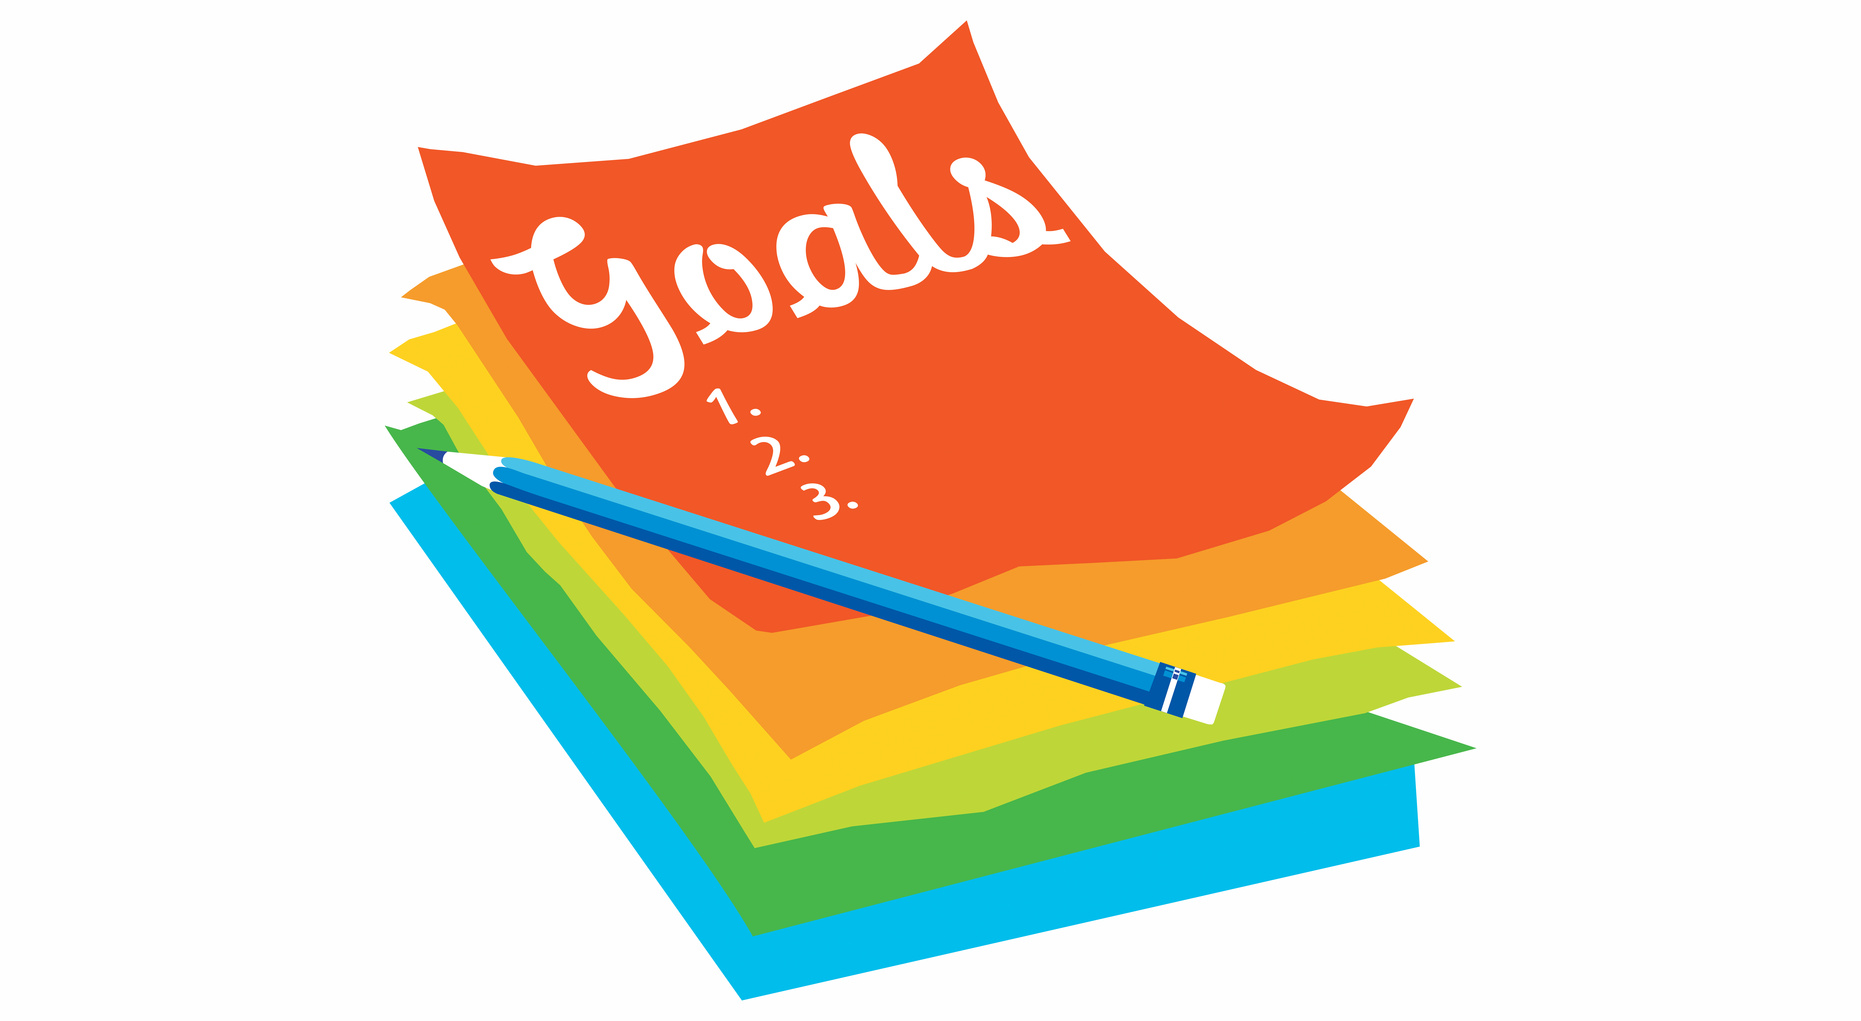 goals clipart student goal